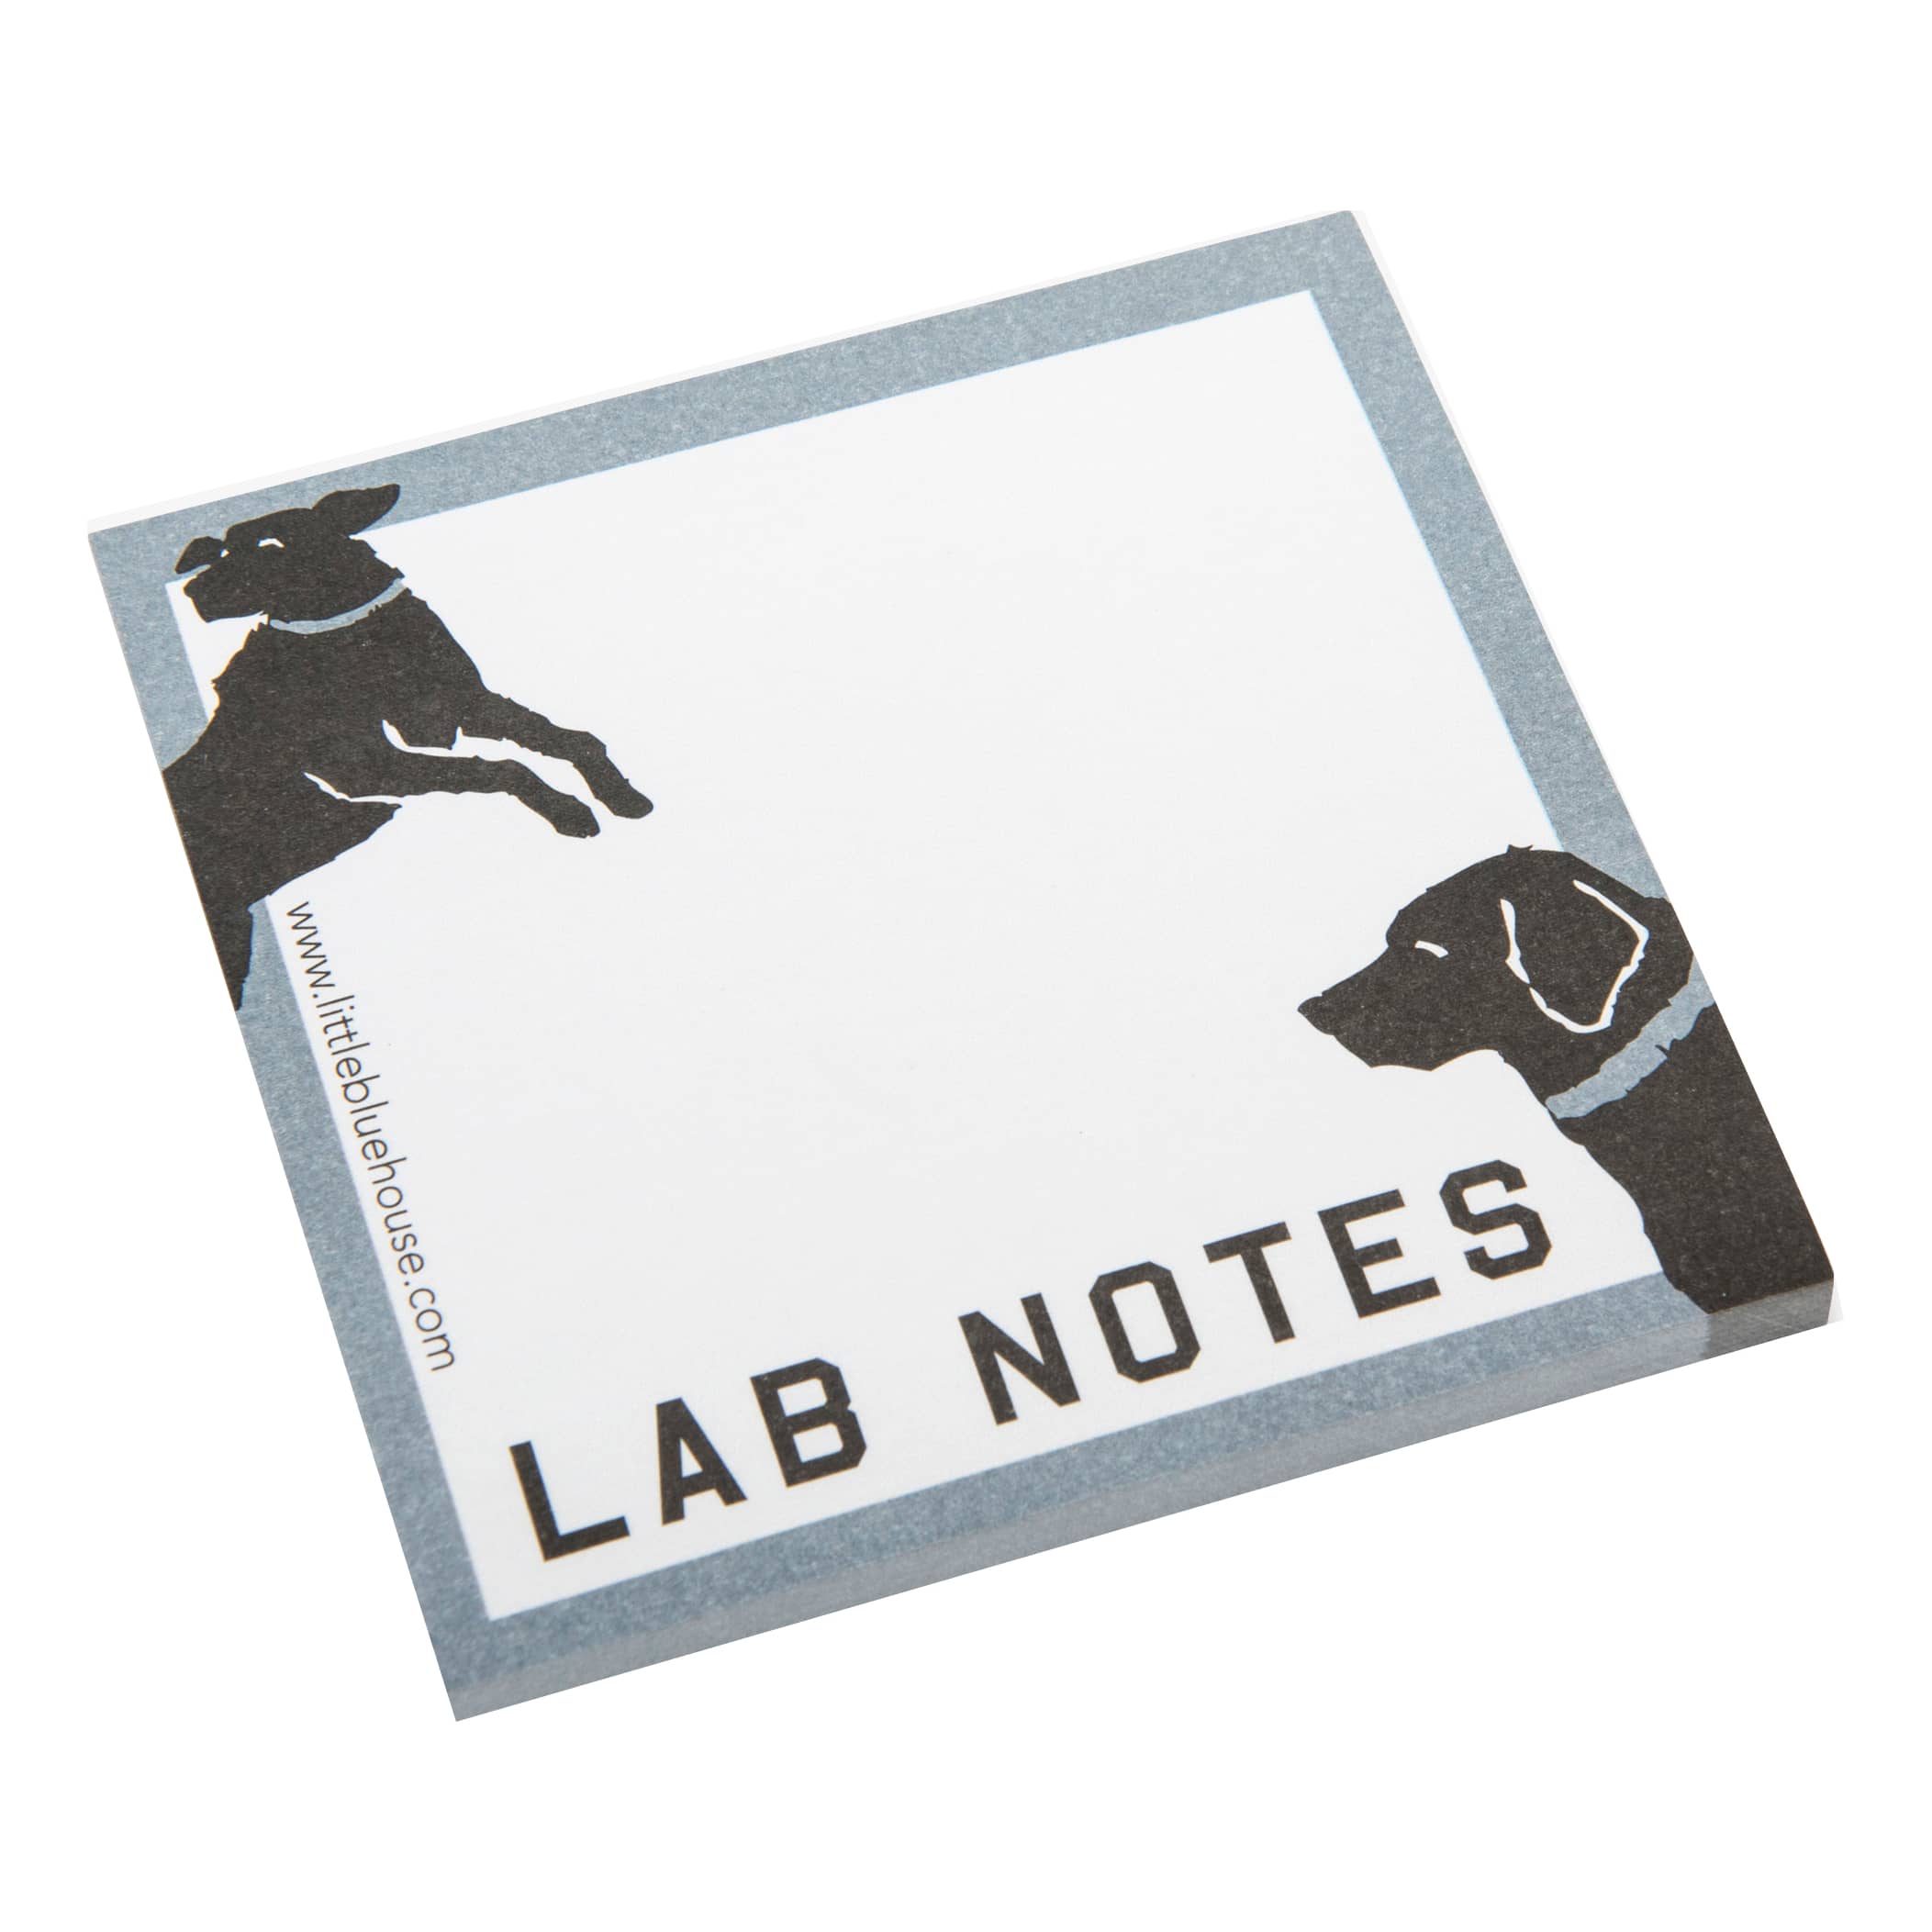 Lab notes